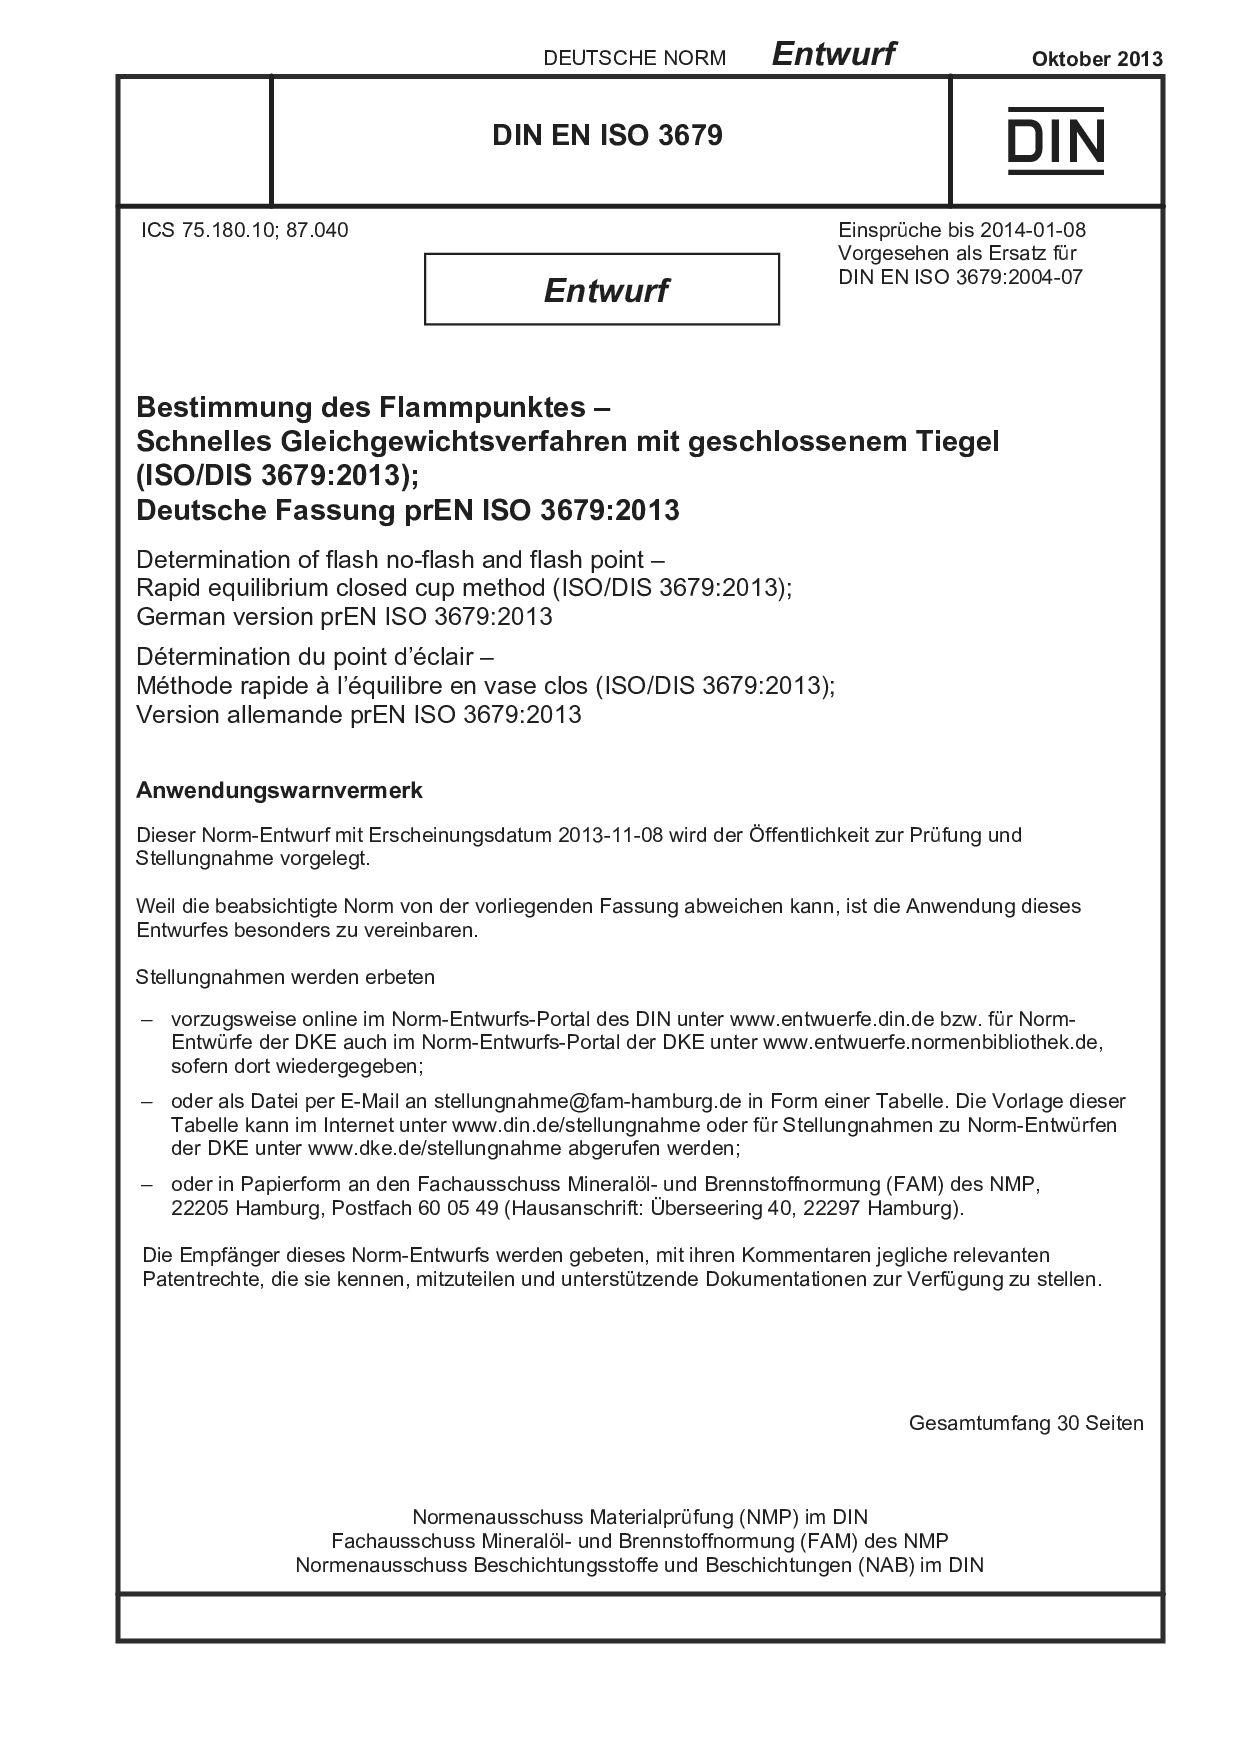 DIN EN ISO 3679 E:2013-10